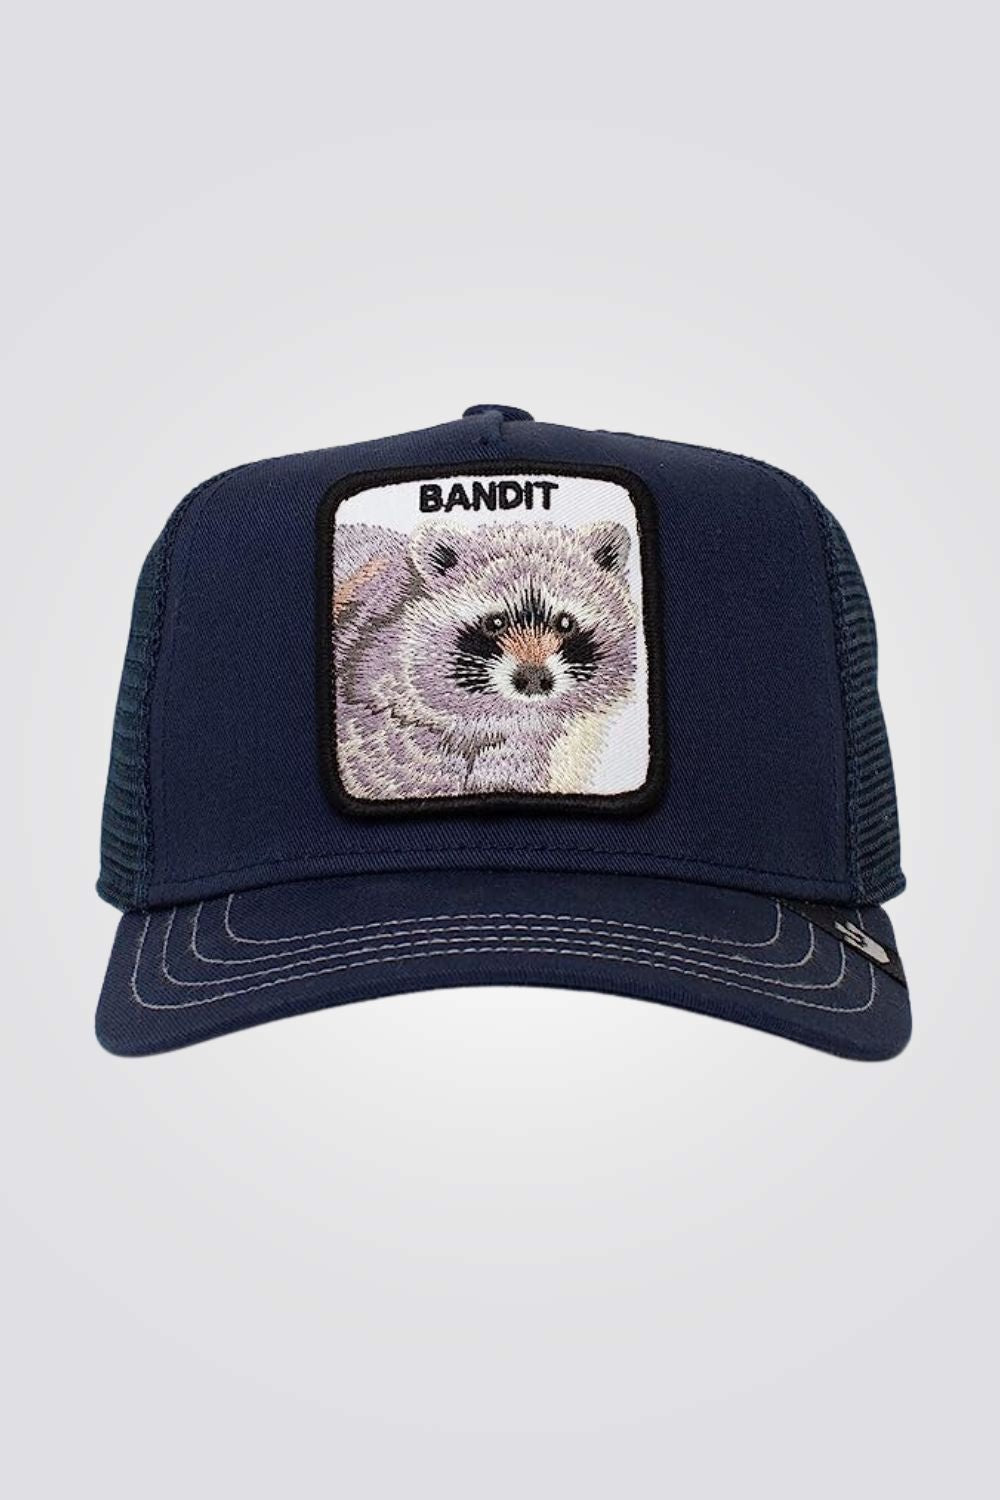 GOORIN - כובע מצחייה THE BANDIT בצבע שחור - MASHBIR//365